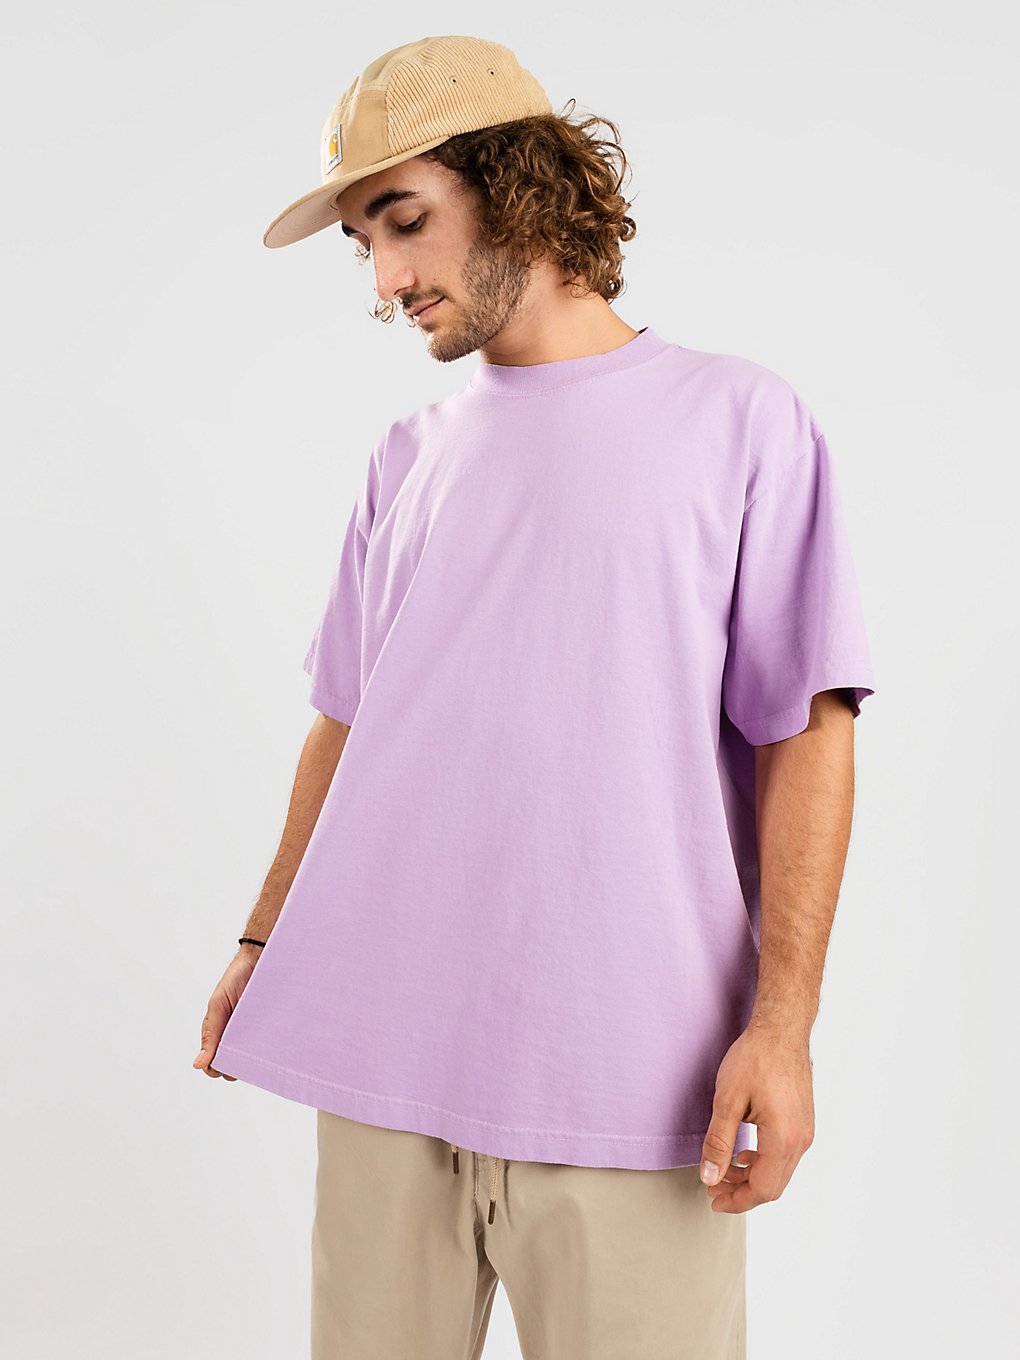 Shaka Wear 7.5 Max Heavyweight Garment Dye T-Shirt pastel purple kaufen